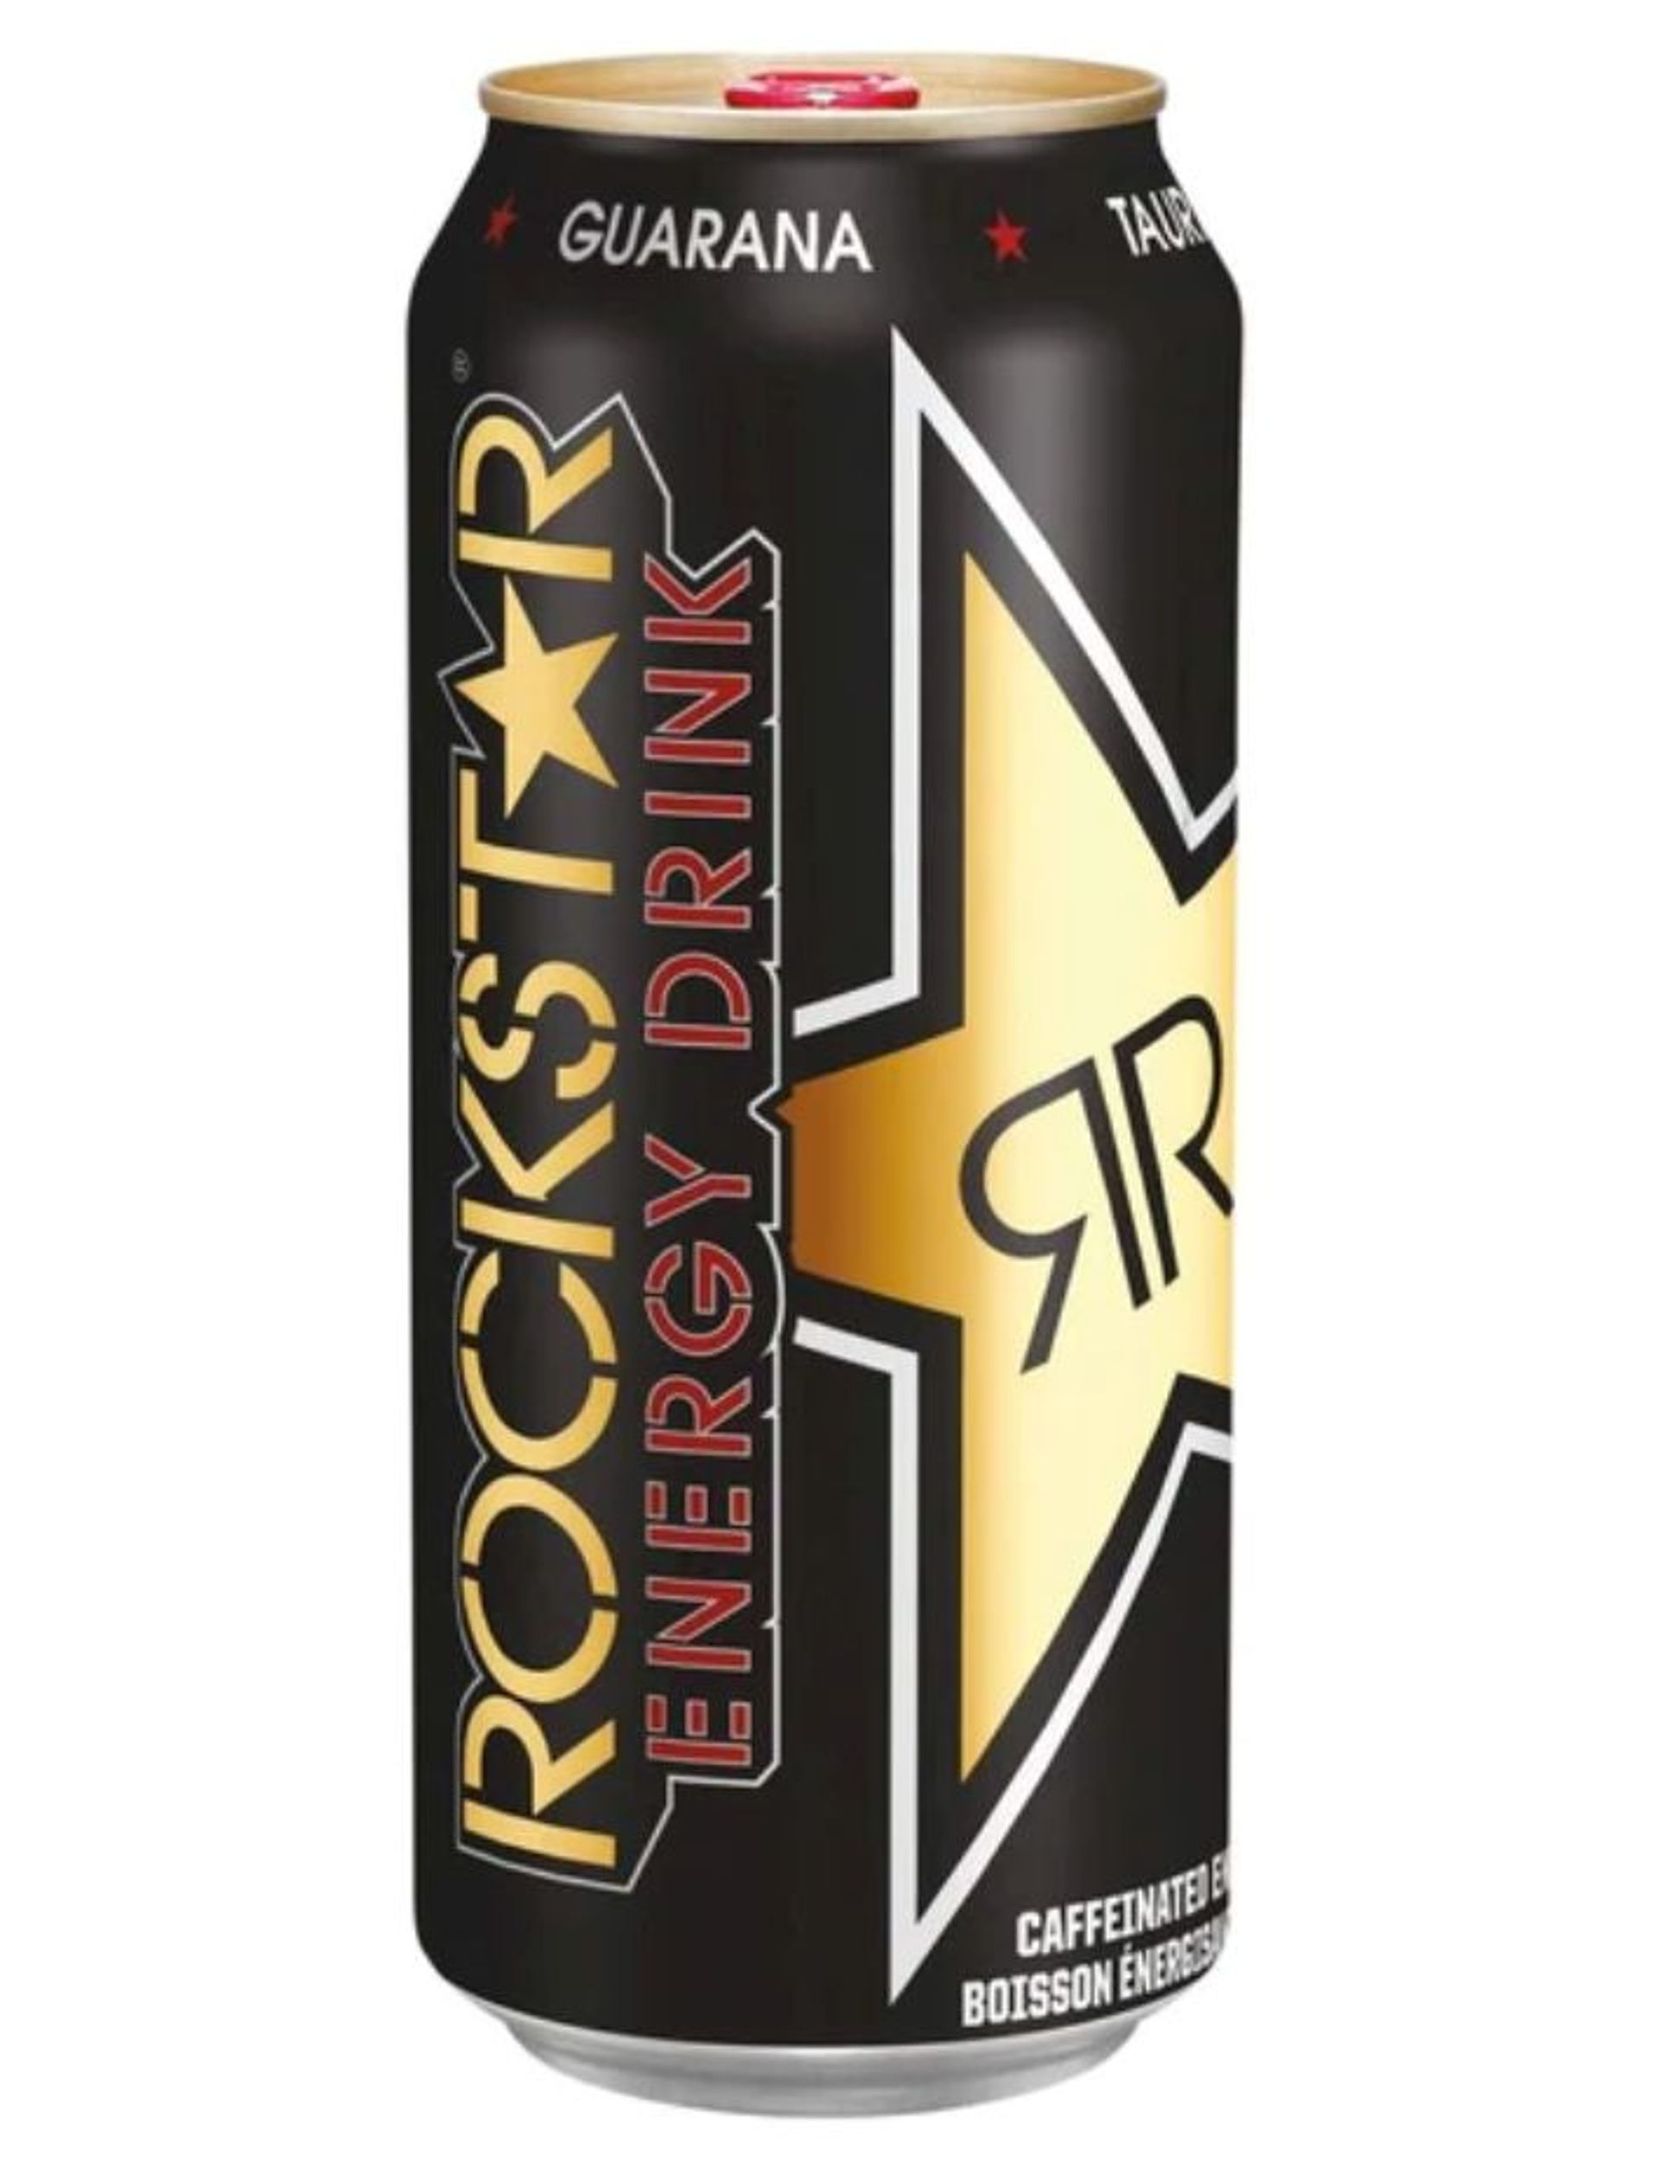 Rockstar Energy Drink 